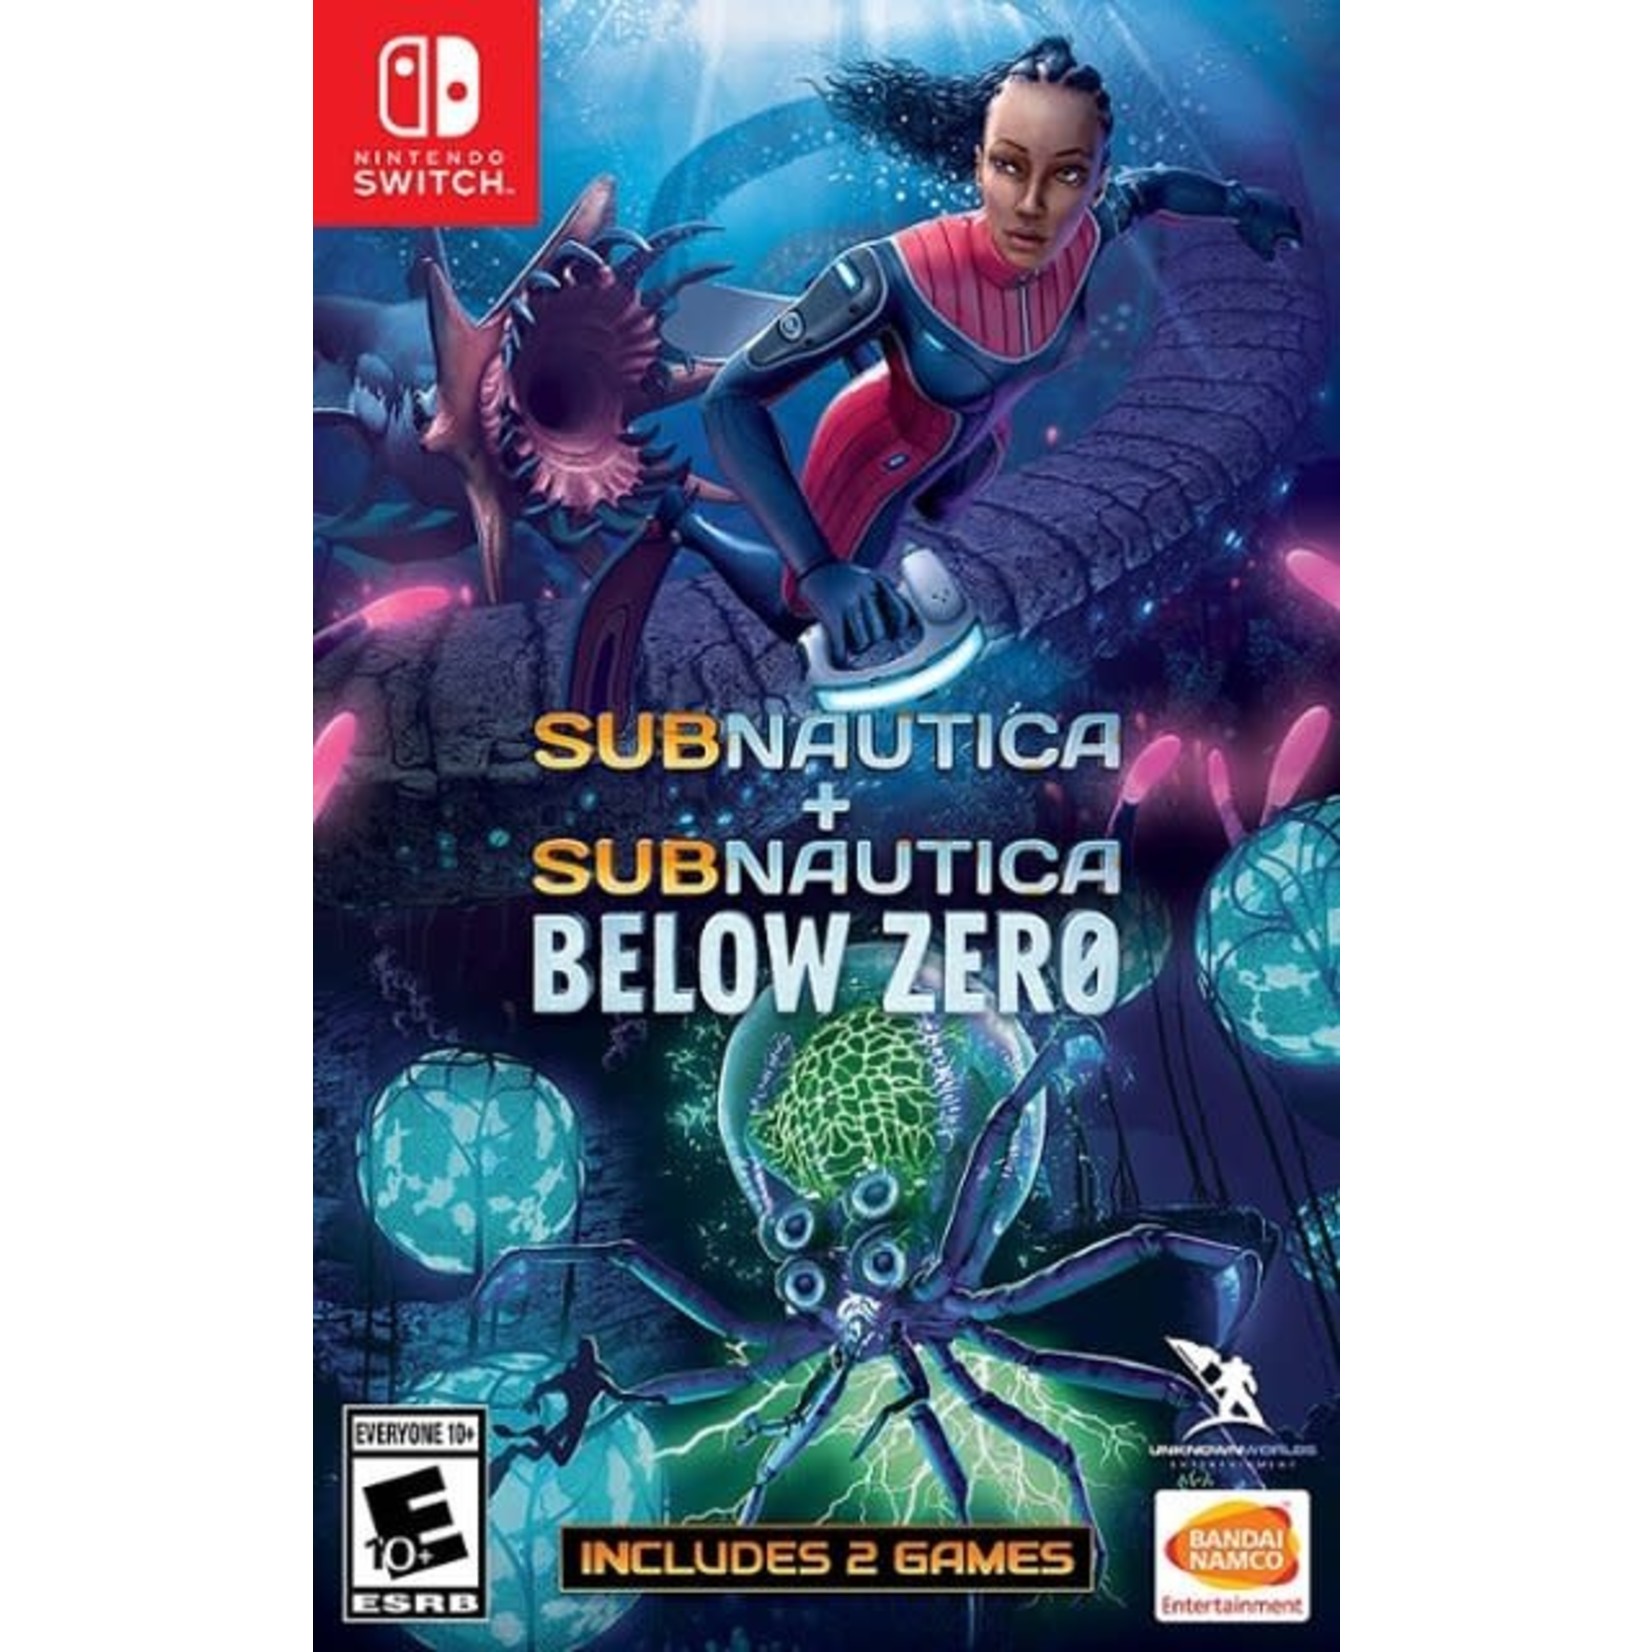 SWITCHU-Subnautica & Subnautica Below Zero